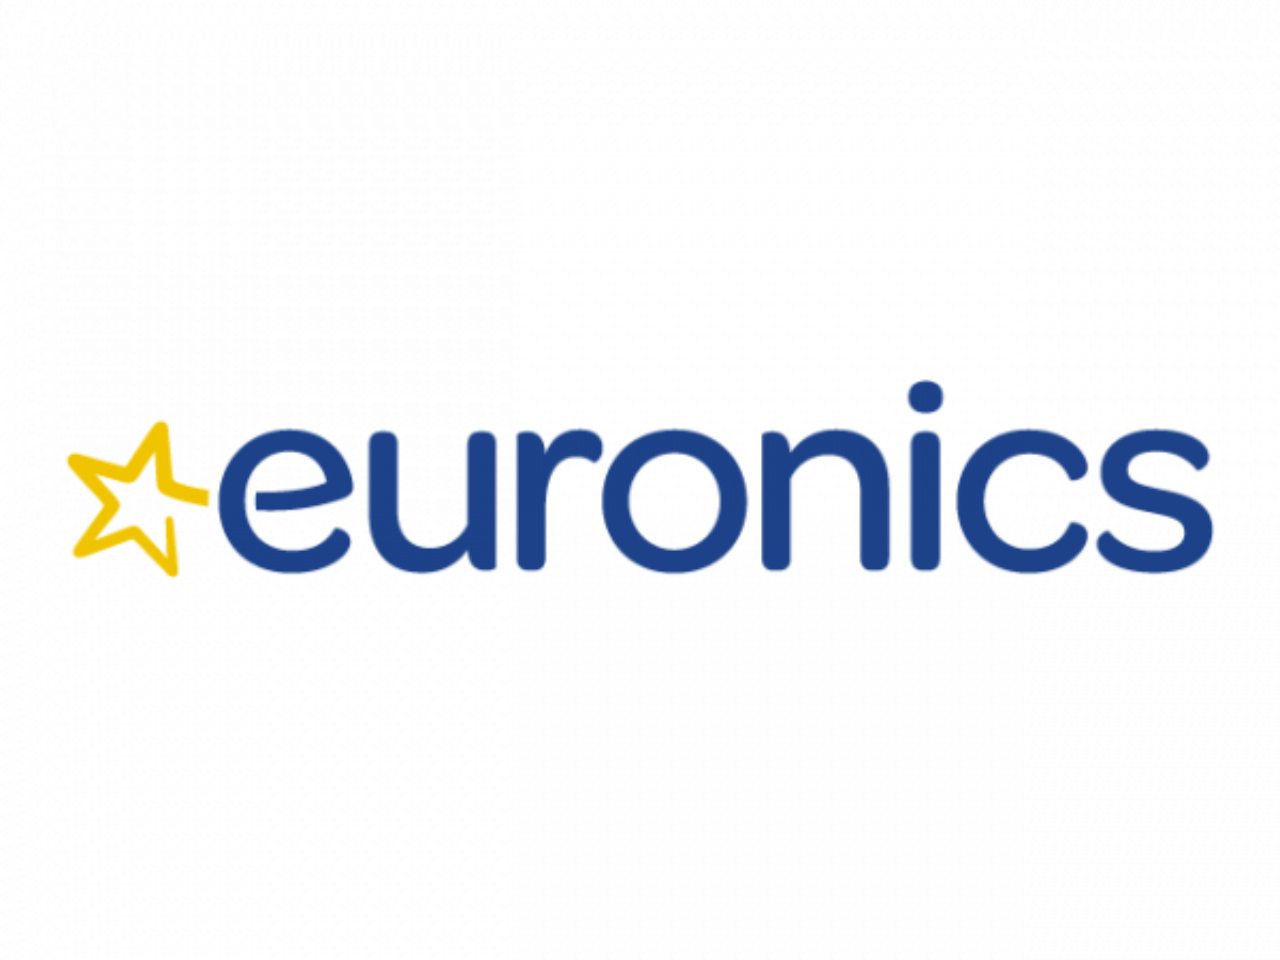 Euronics, 14/1/2022 - Computermagazine.it